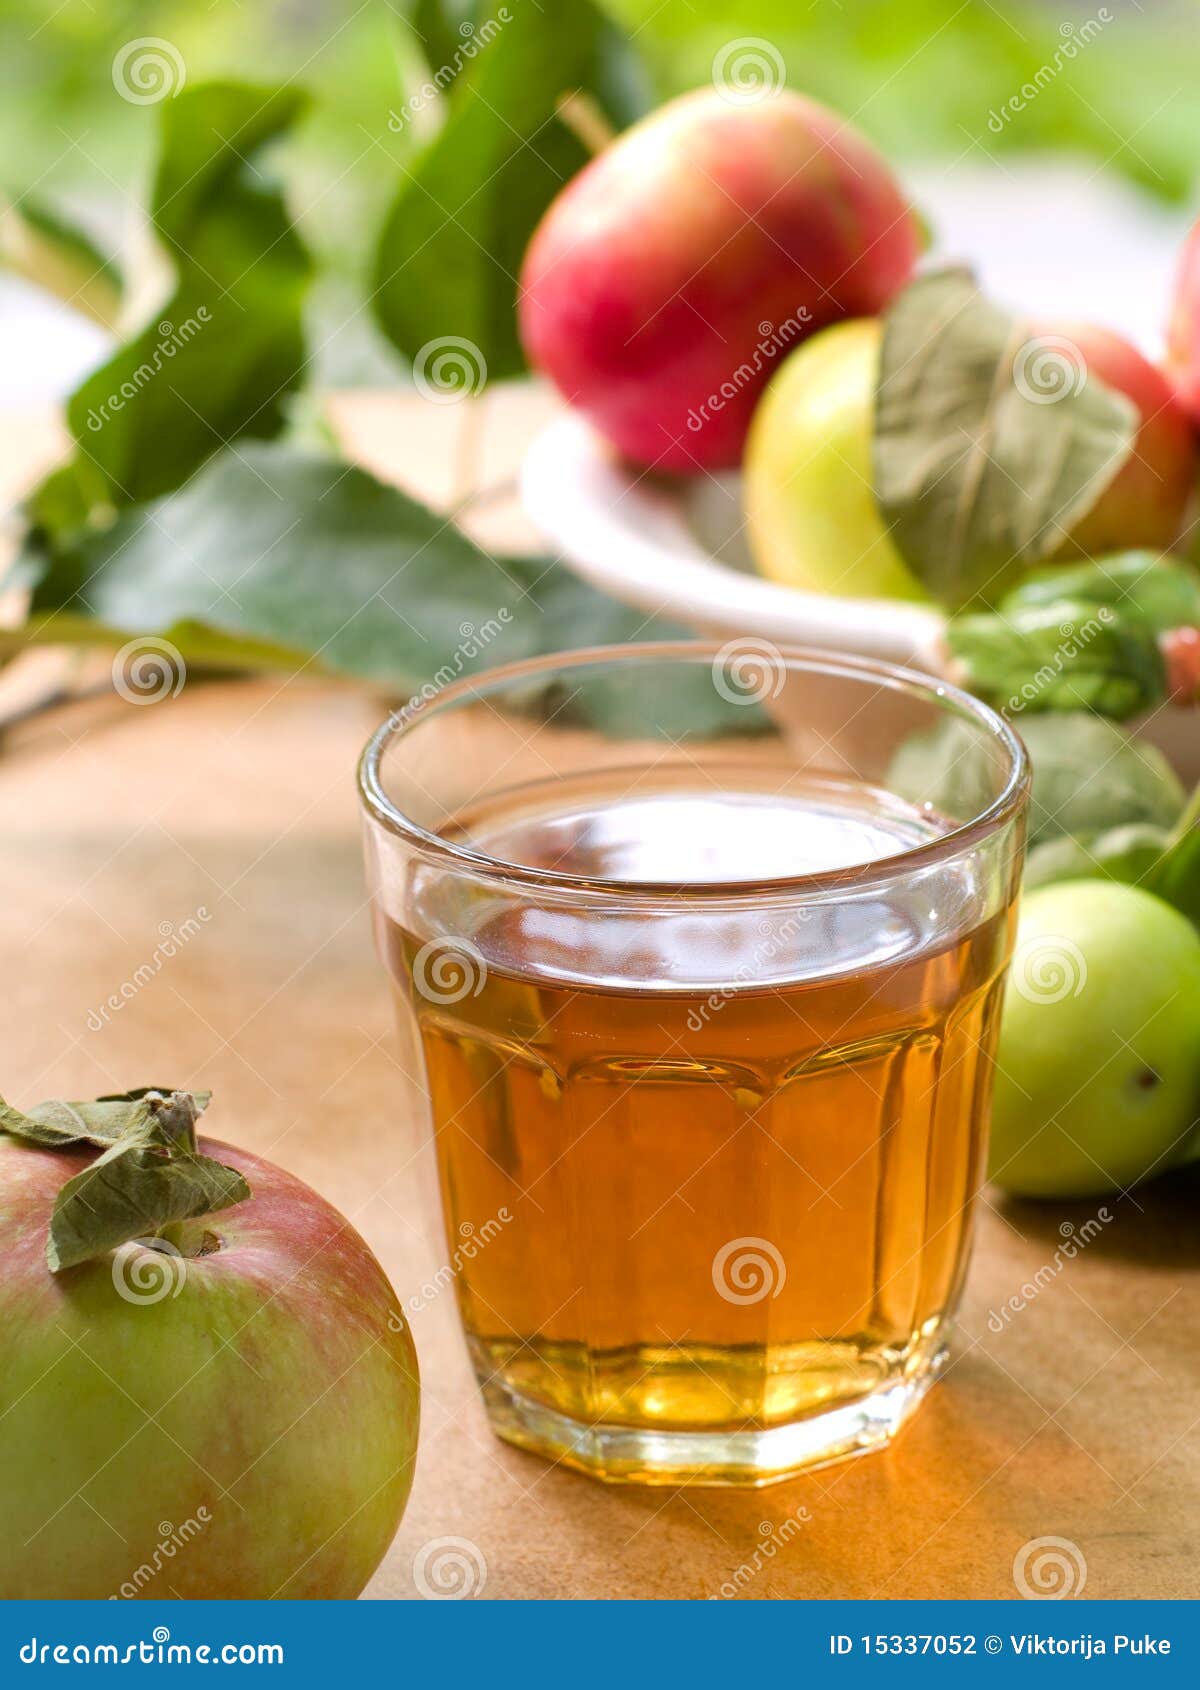 Apple juice stock photo. Image of alcoholic, vertical - 15337052